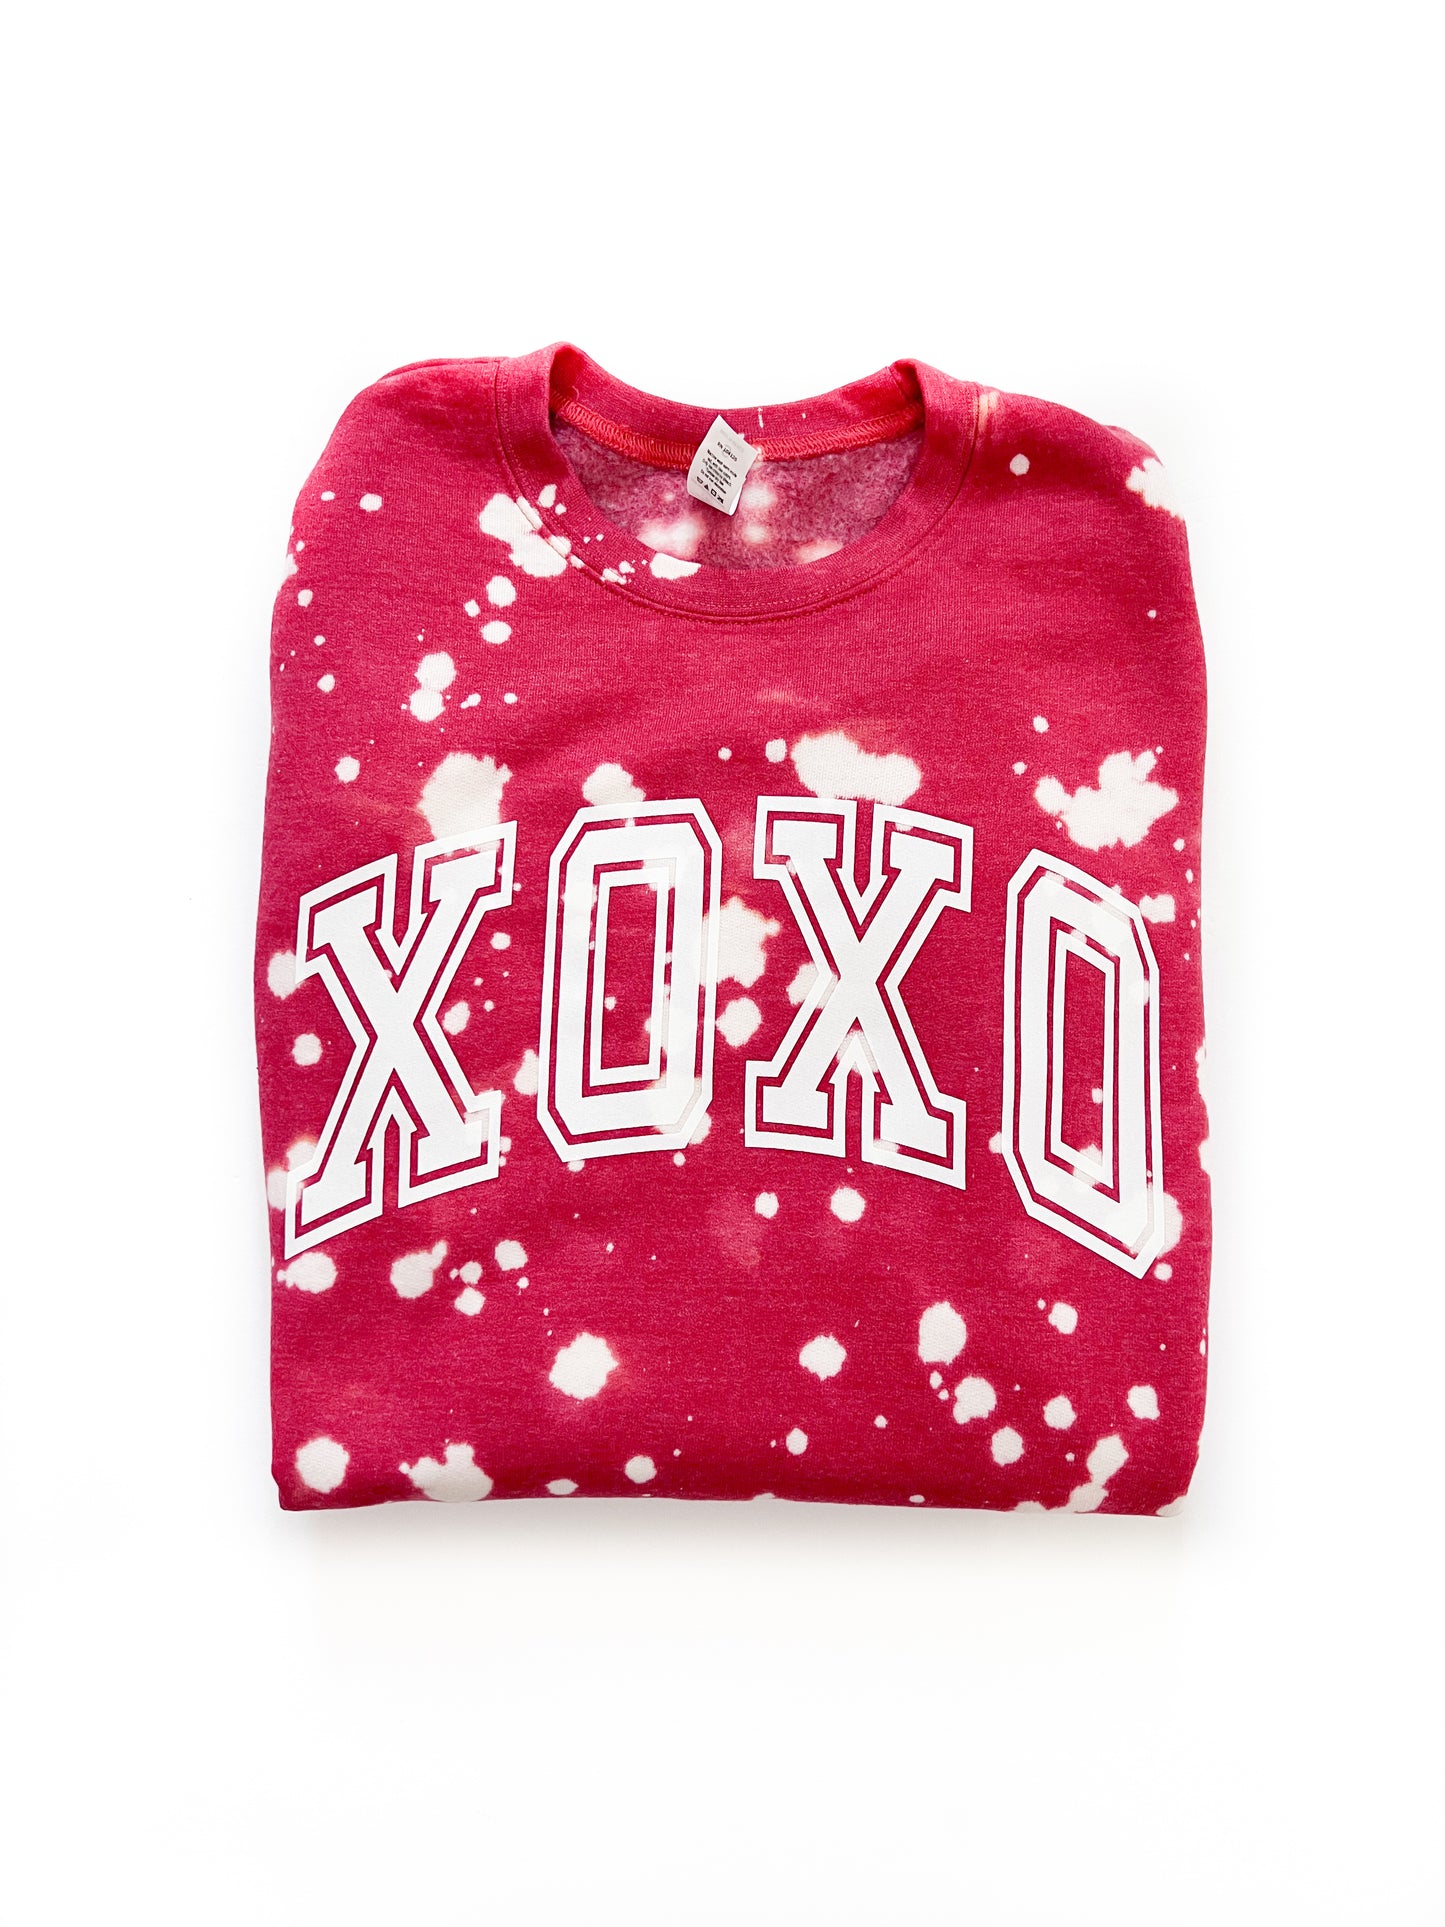 XOXO Bleached Valentine's Day Crewneck Sweater